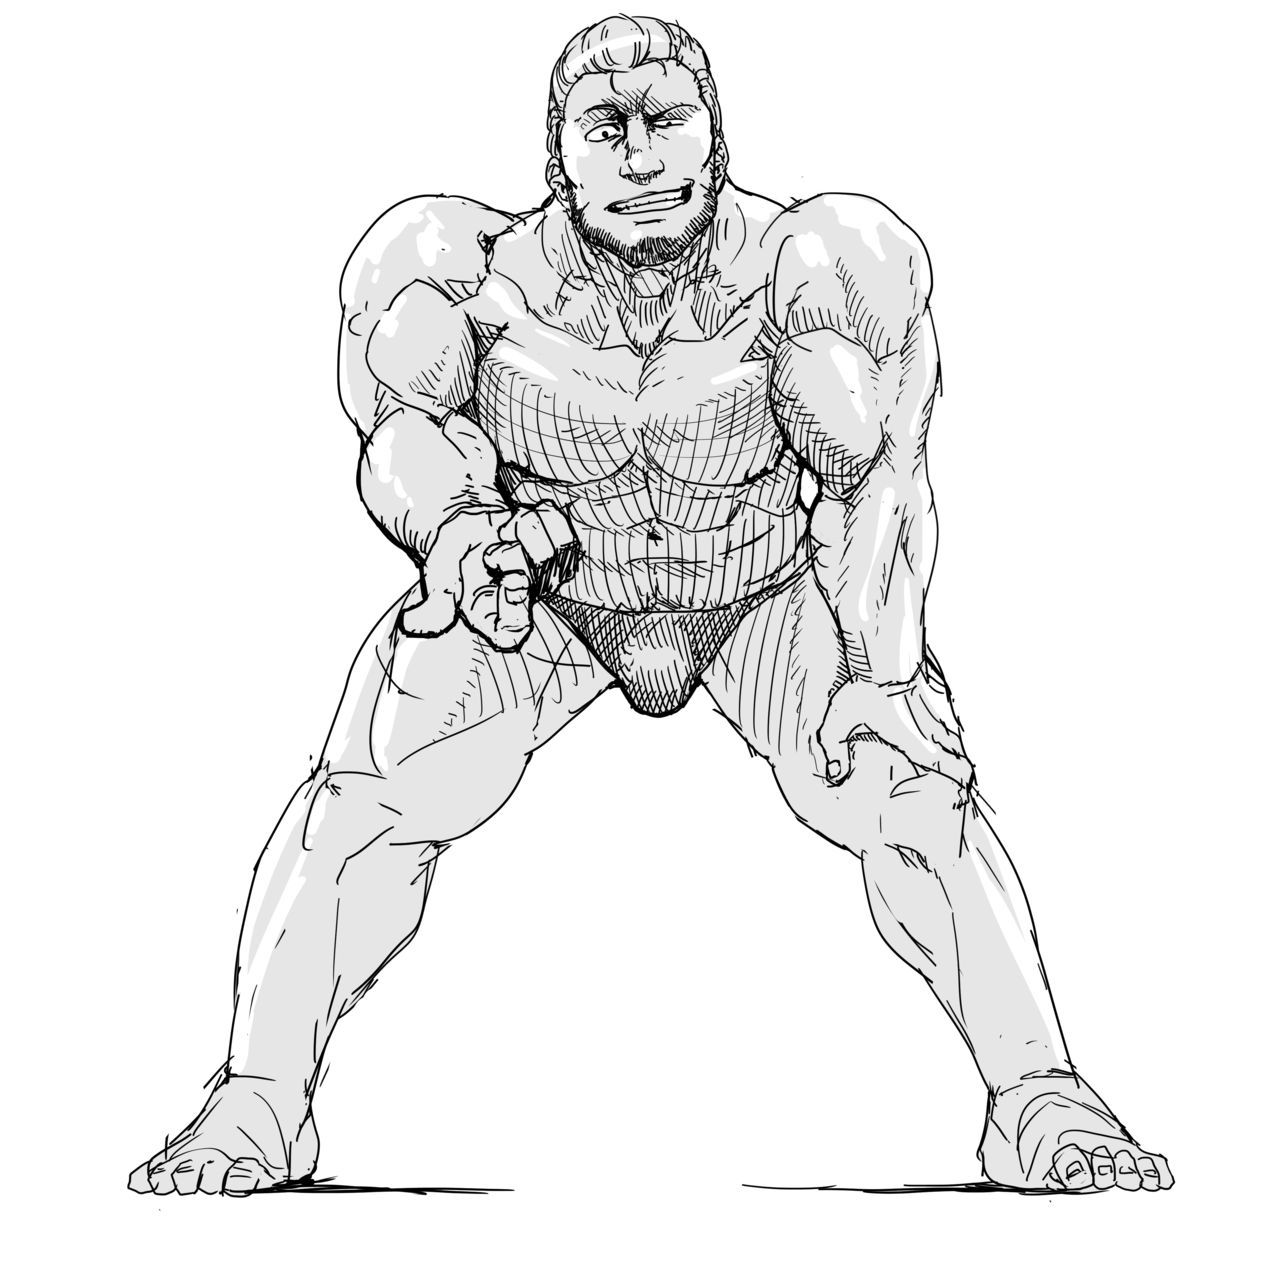 [Gakuranman/Chijimetaro] Artworks and animations (male giants) 299